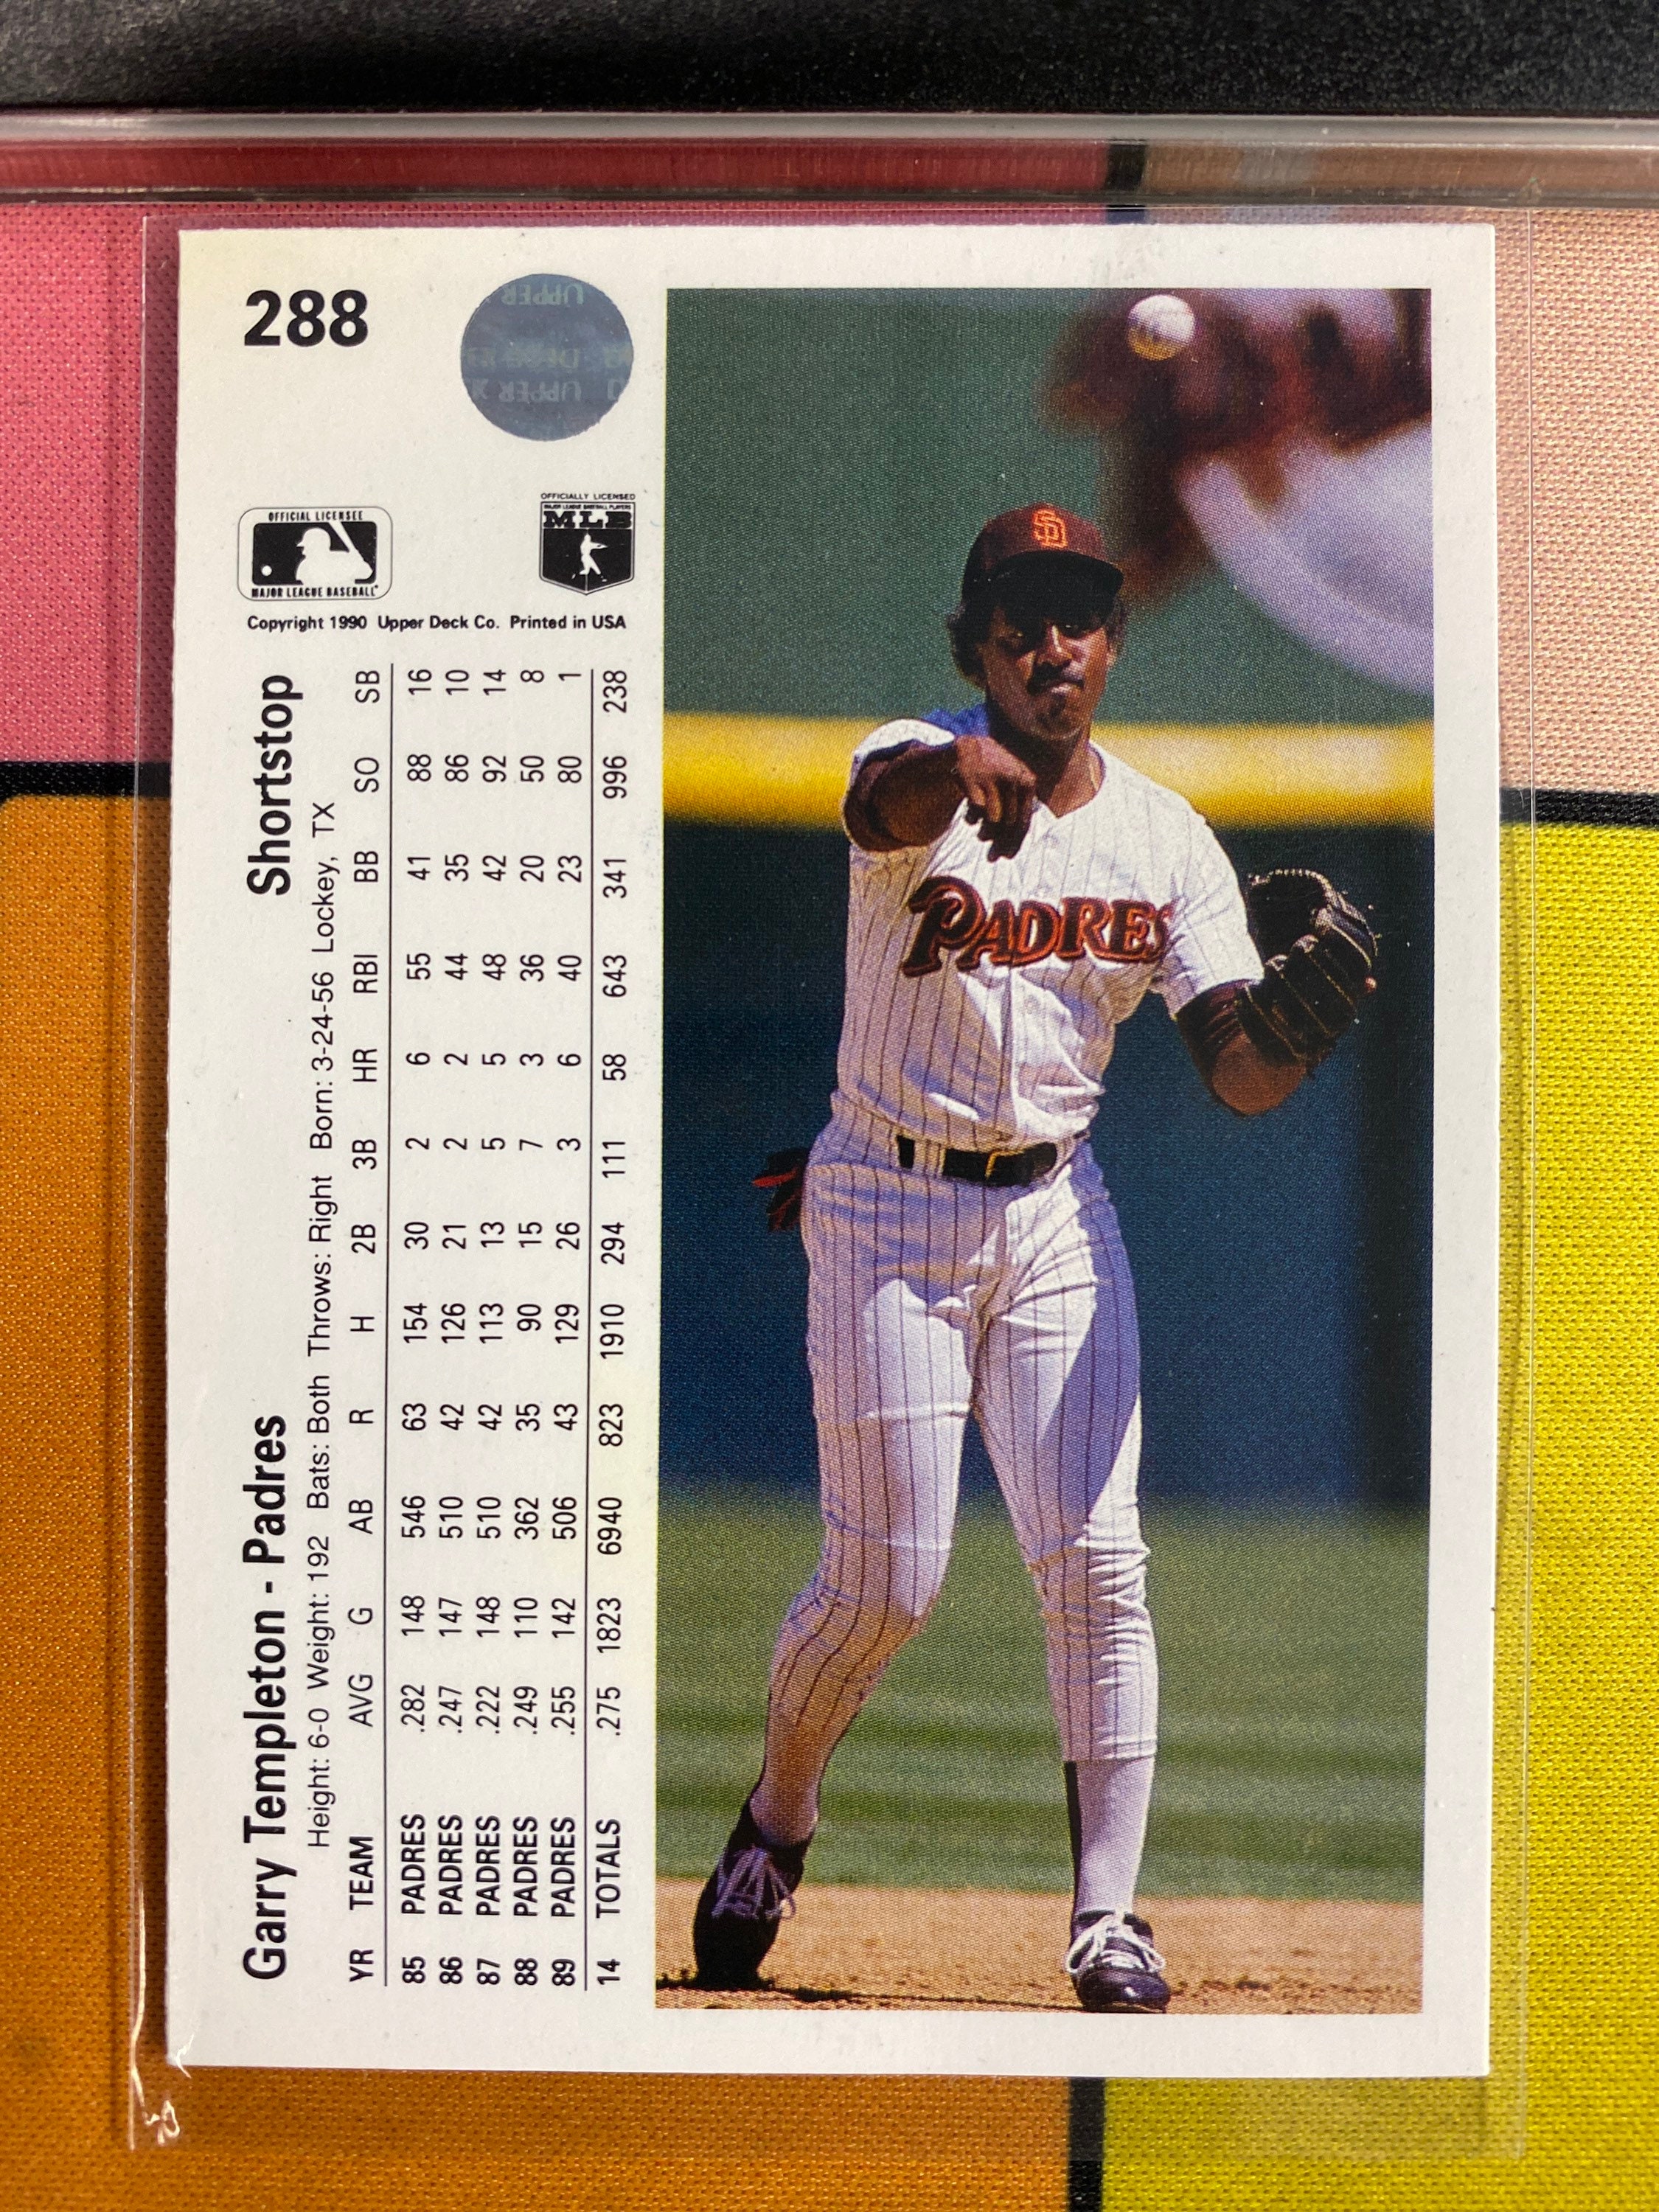 Garry Templeton autographed baseball card (San Diego Padres